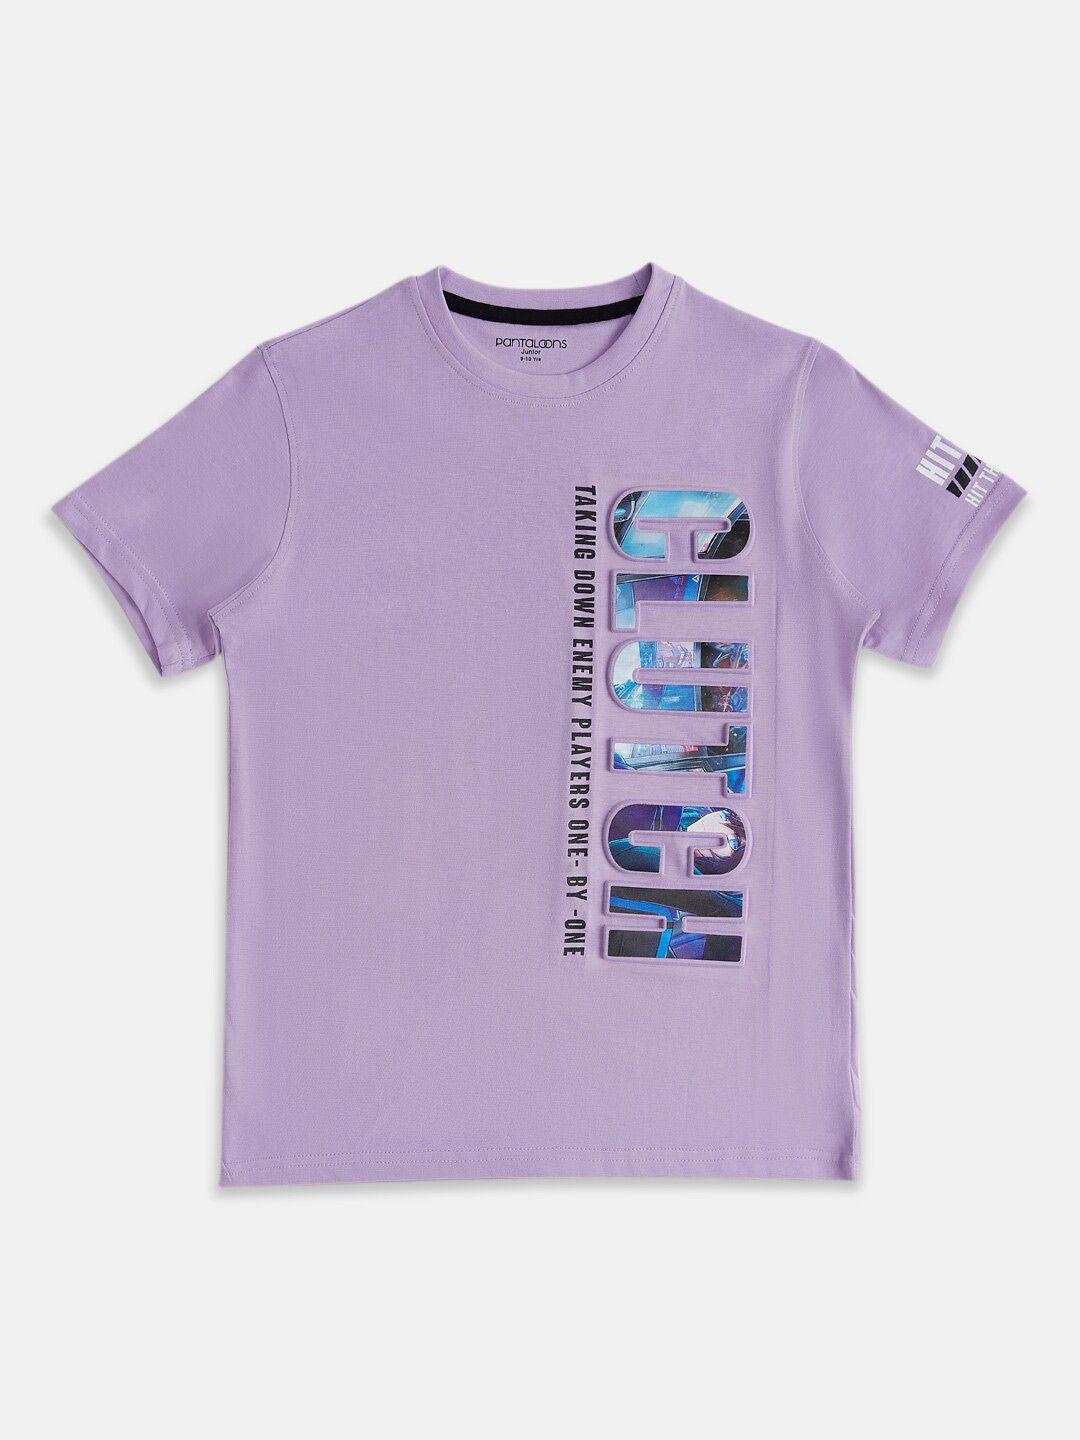 pantaloons-junior-boys-cotton-typography-printed-t-shirt